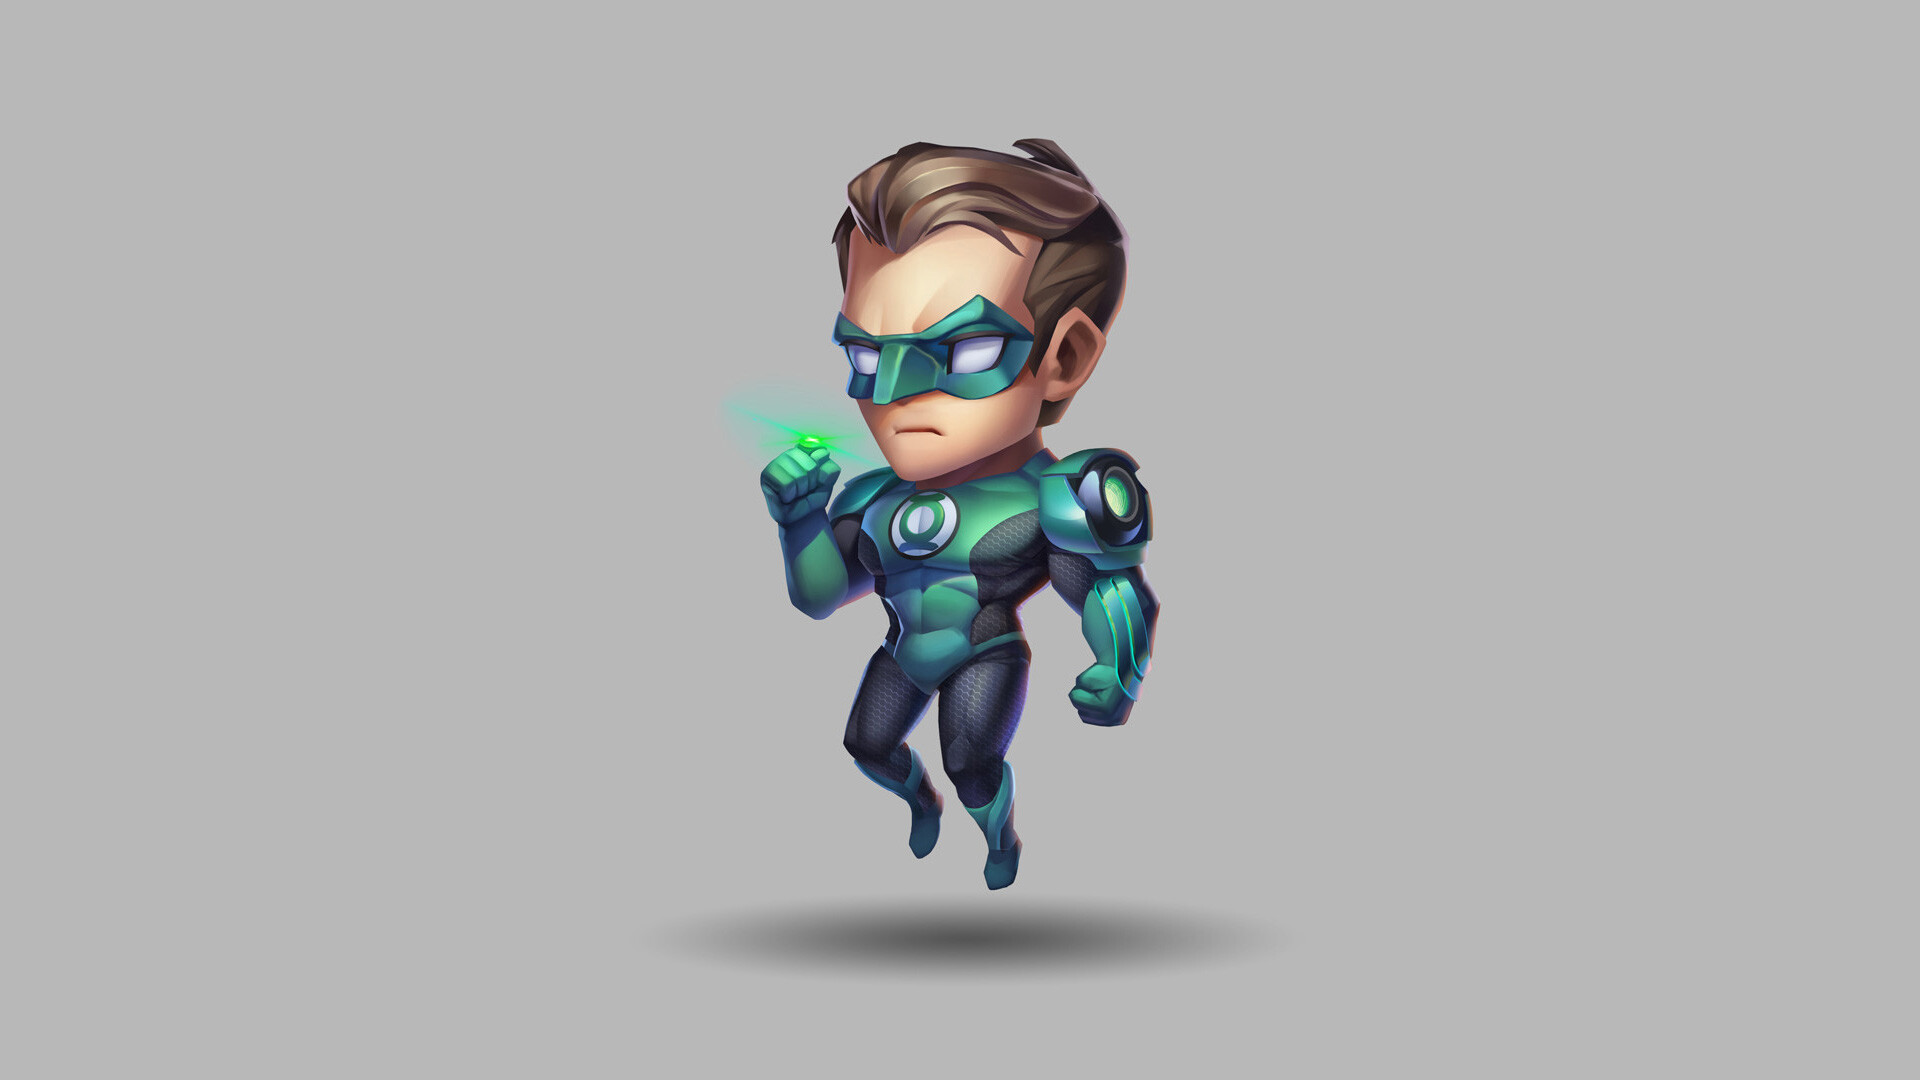 Green Lantern: An intergalactic peacekeeping force, The DC character. 1920x1080 Full HD Wallpaper.